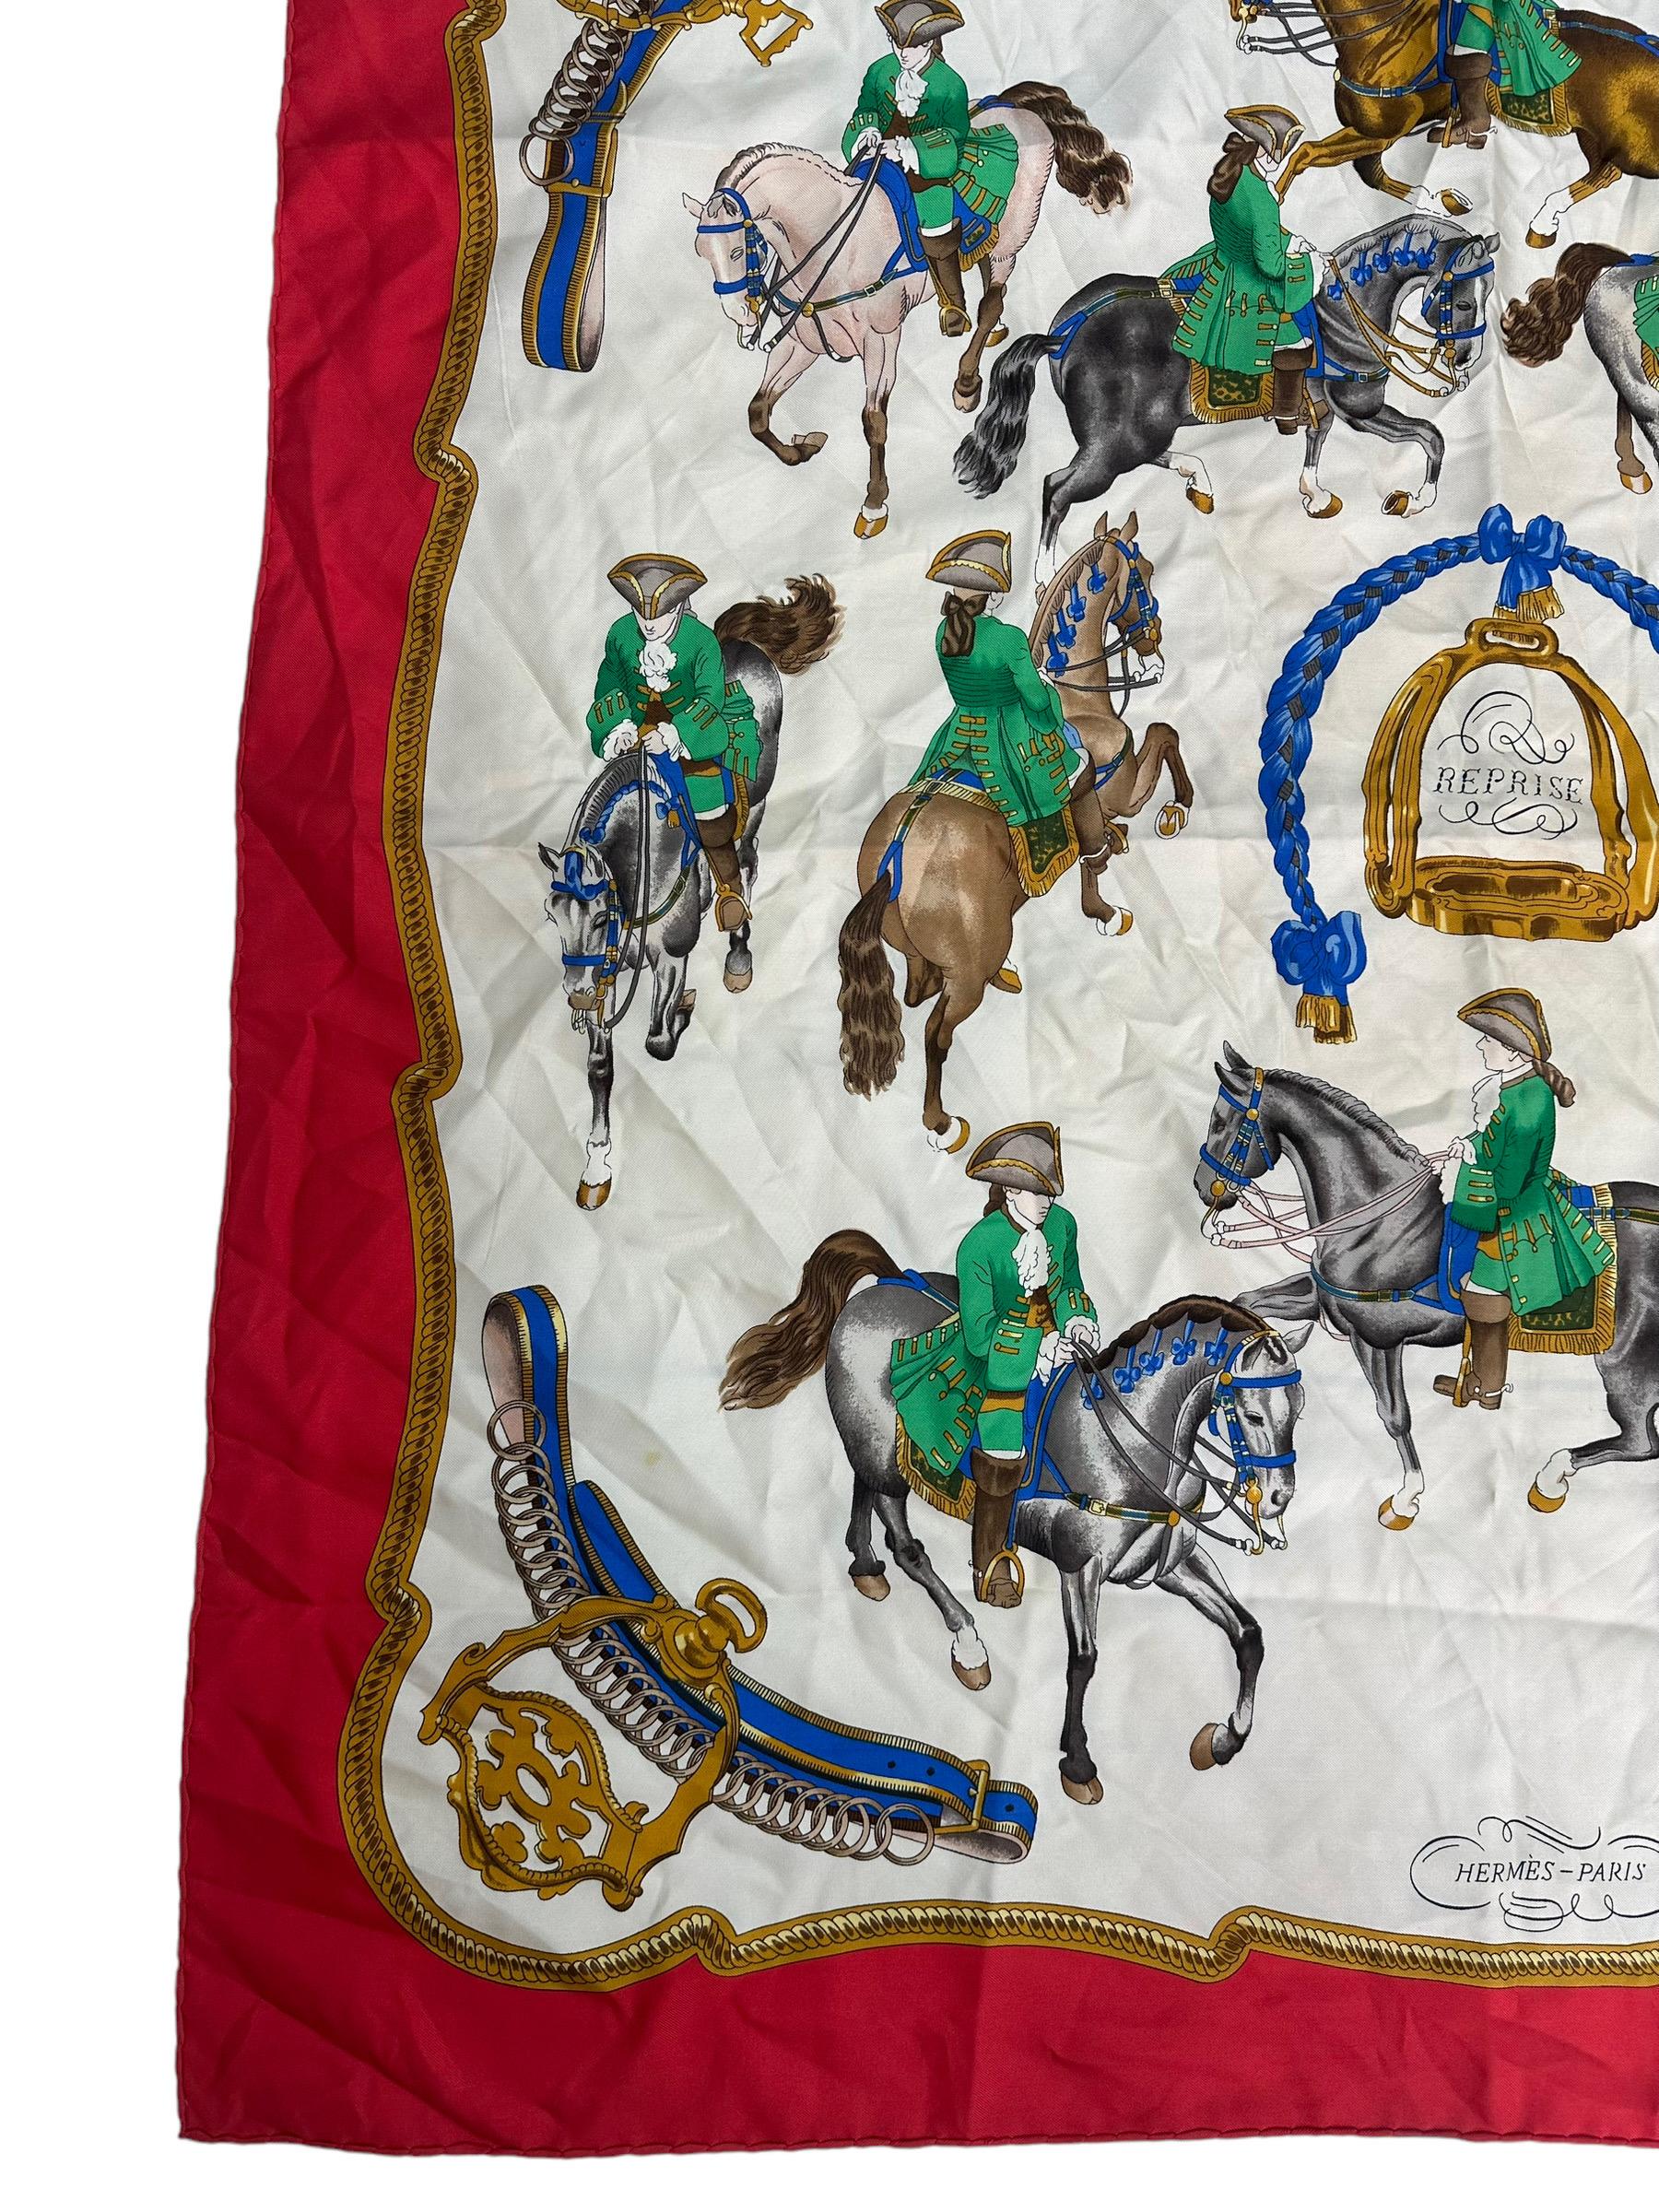 Foulard von Hermès, Modell Reprise, aus 100% Baumwolle, mit roter Bordüre und Napoleonmotiven in Kavallerie. Misura quadrata 90×90 centimetri, si presenta in buone condizioni. Sie können als Accessoire oder als Dekoration für eine Bordüre oder als